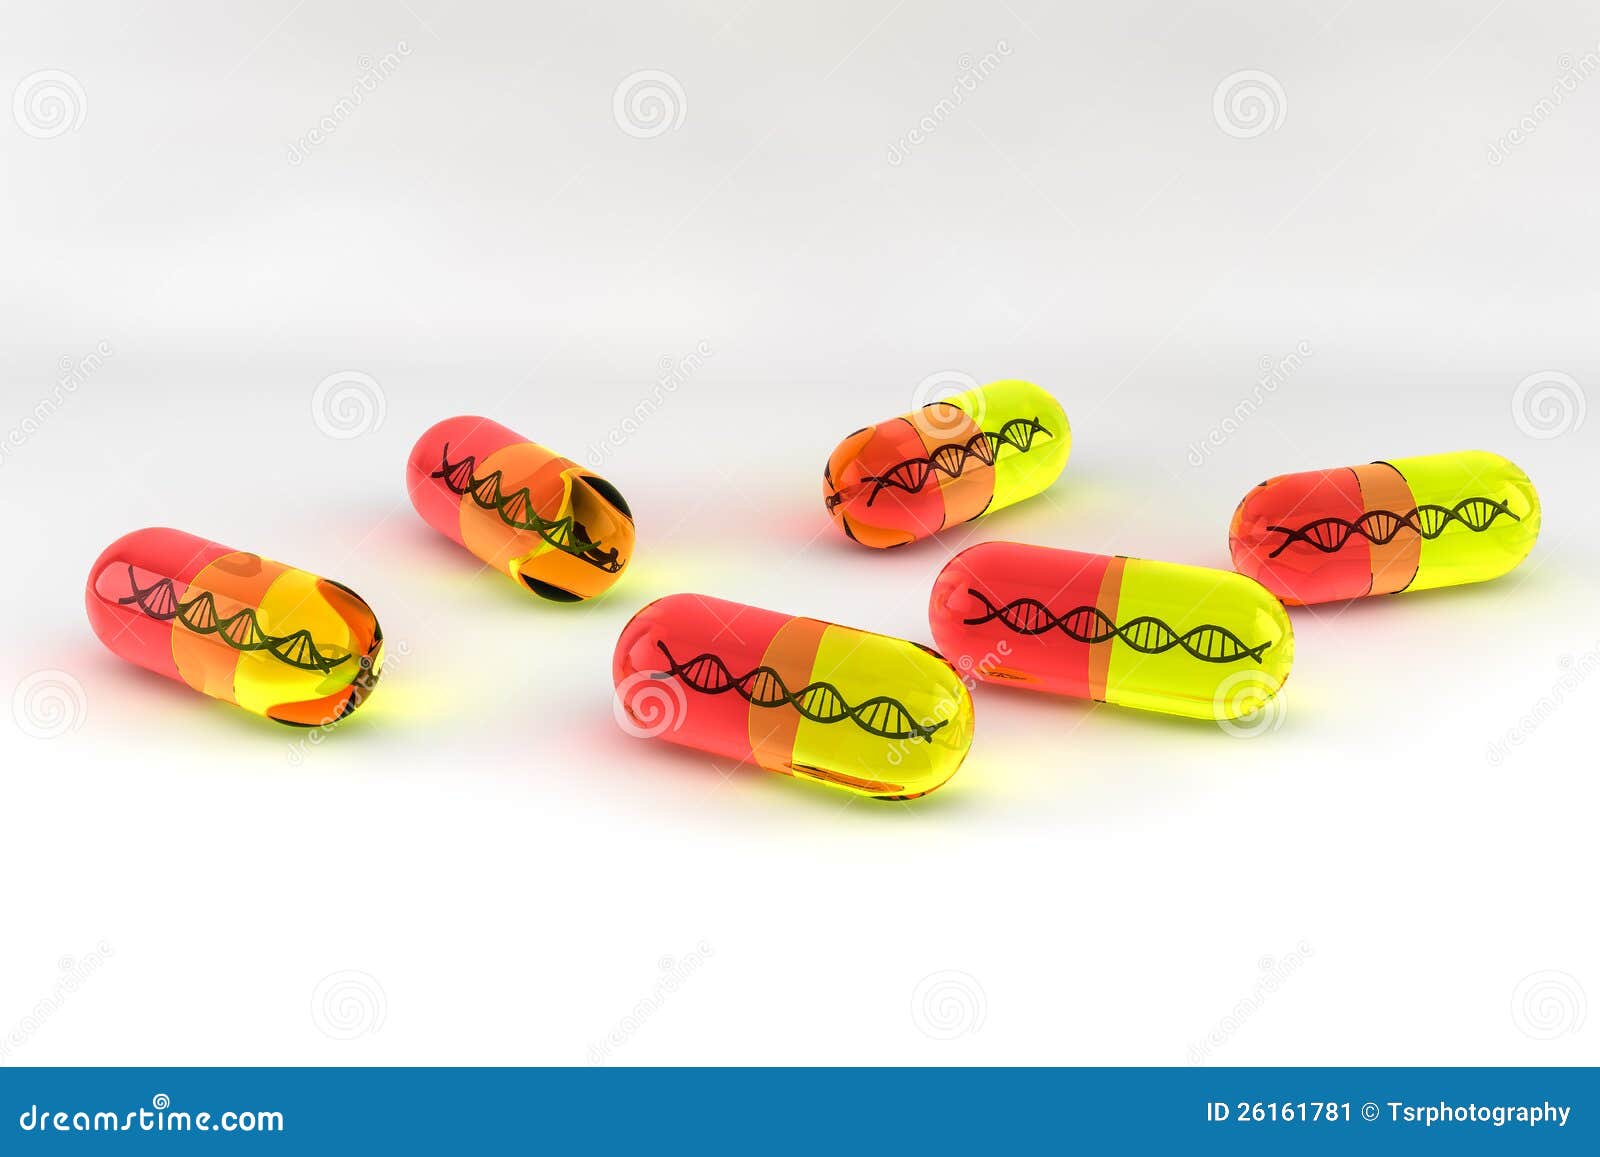 gene therapy pills